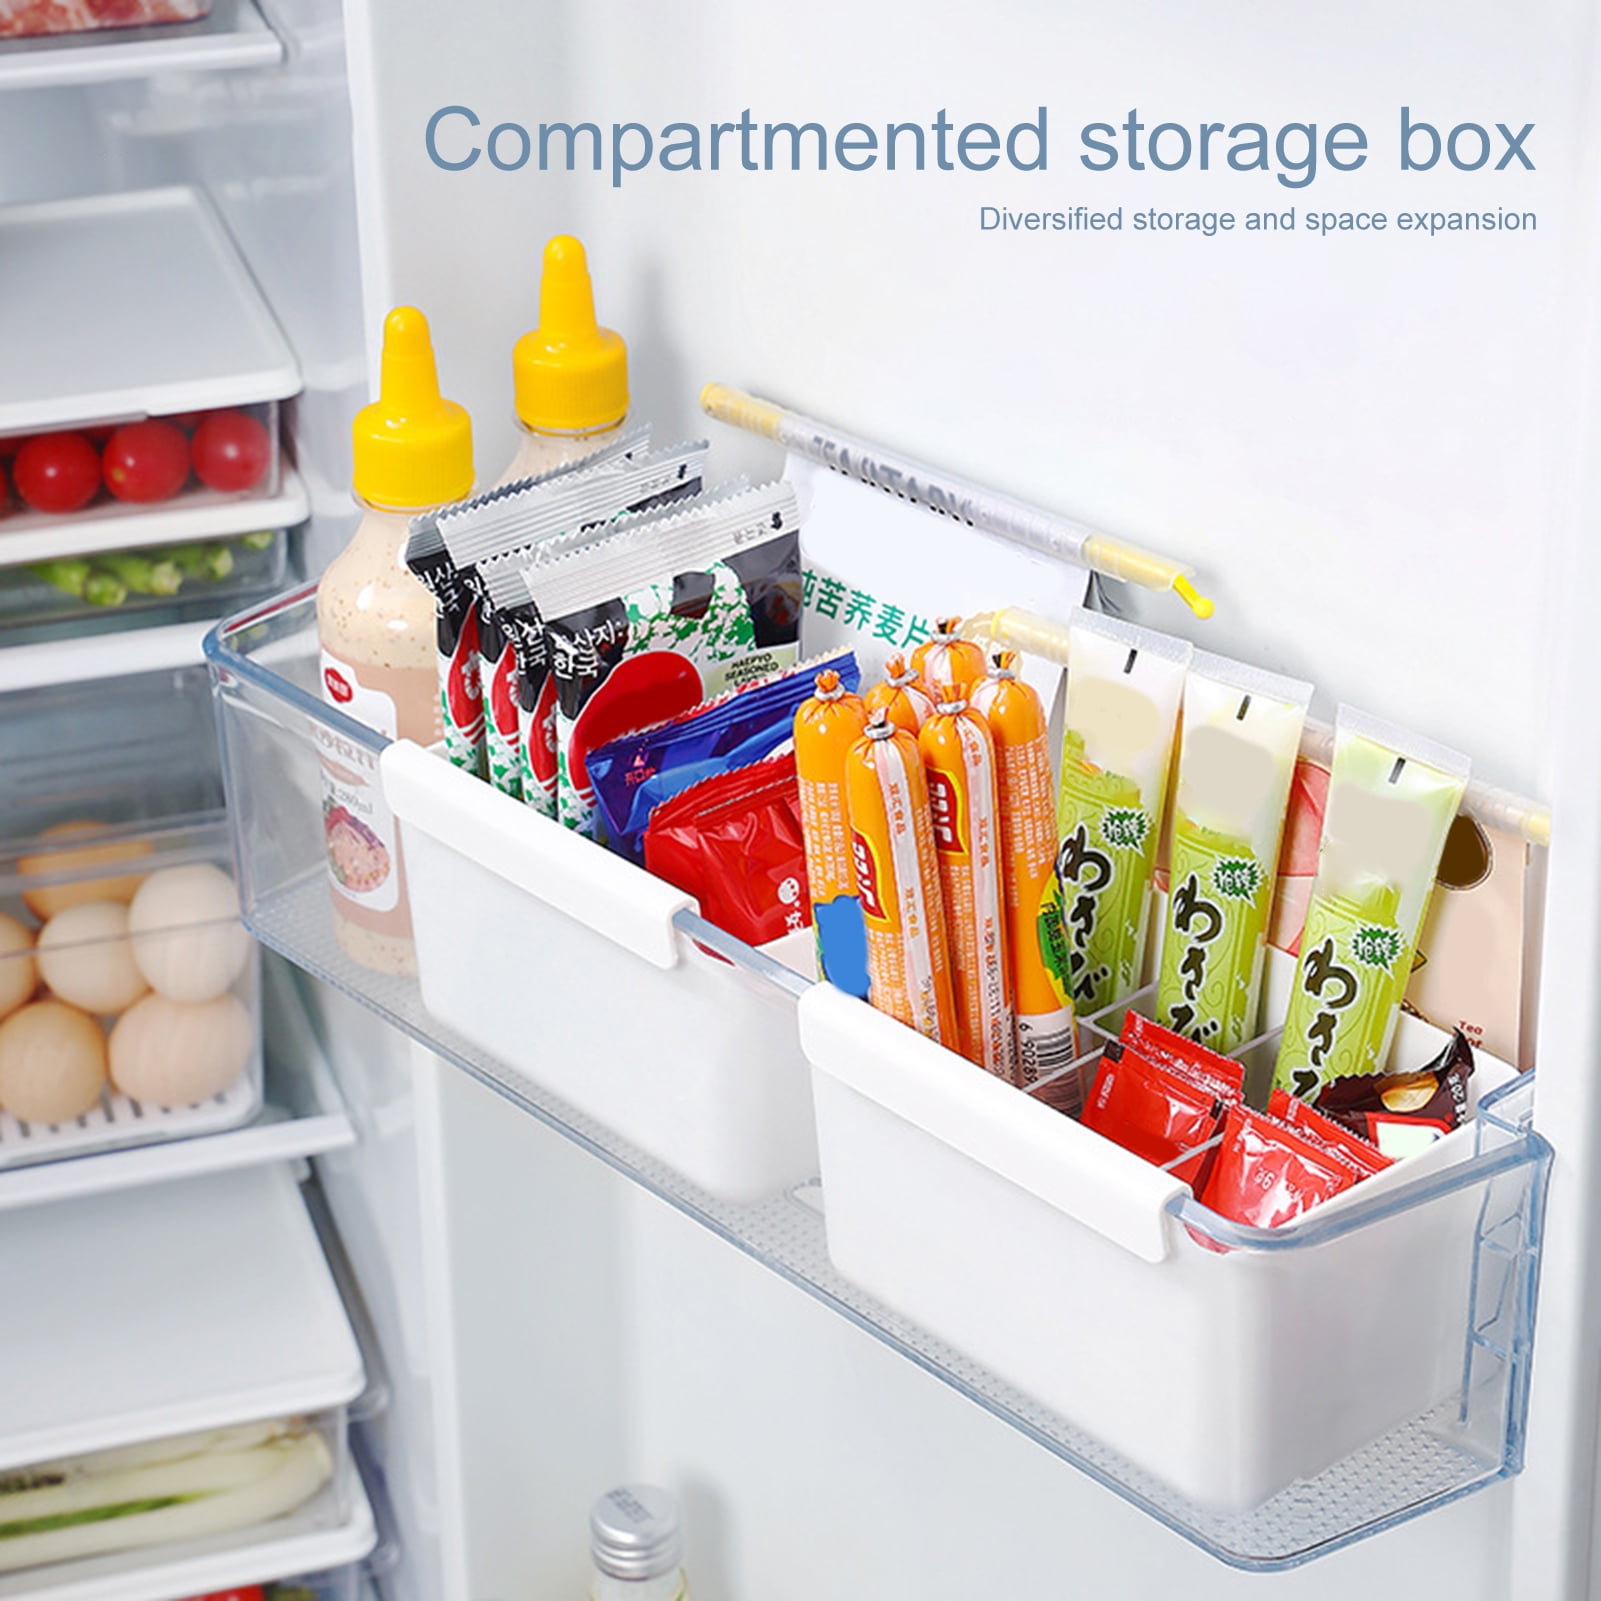 Reduced price refrigerator organization